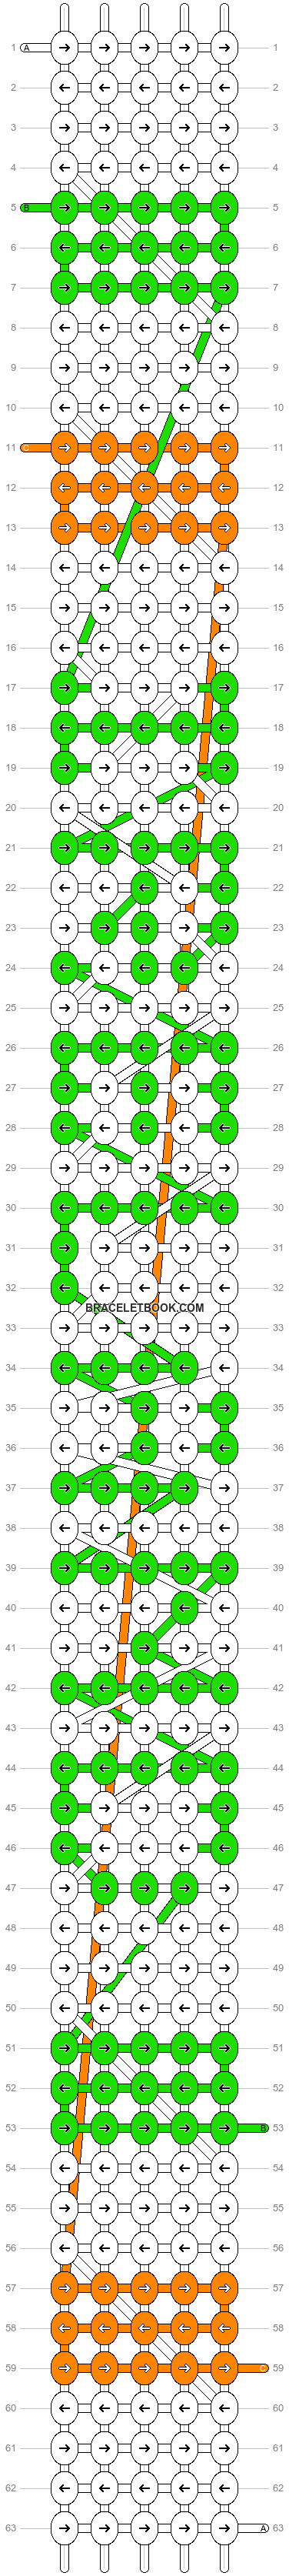 Alpha pattern #21968 pattern